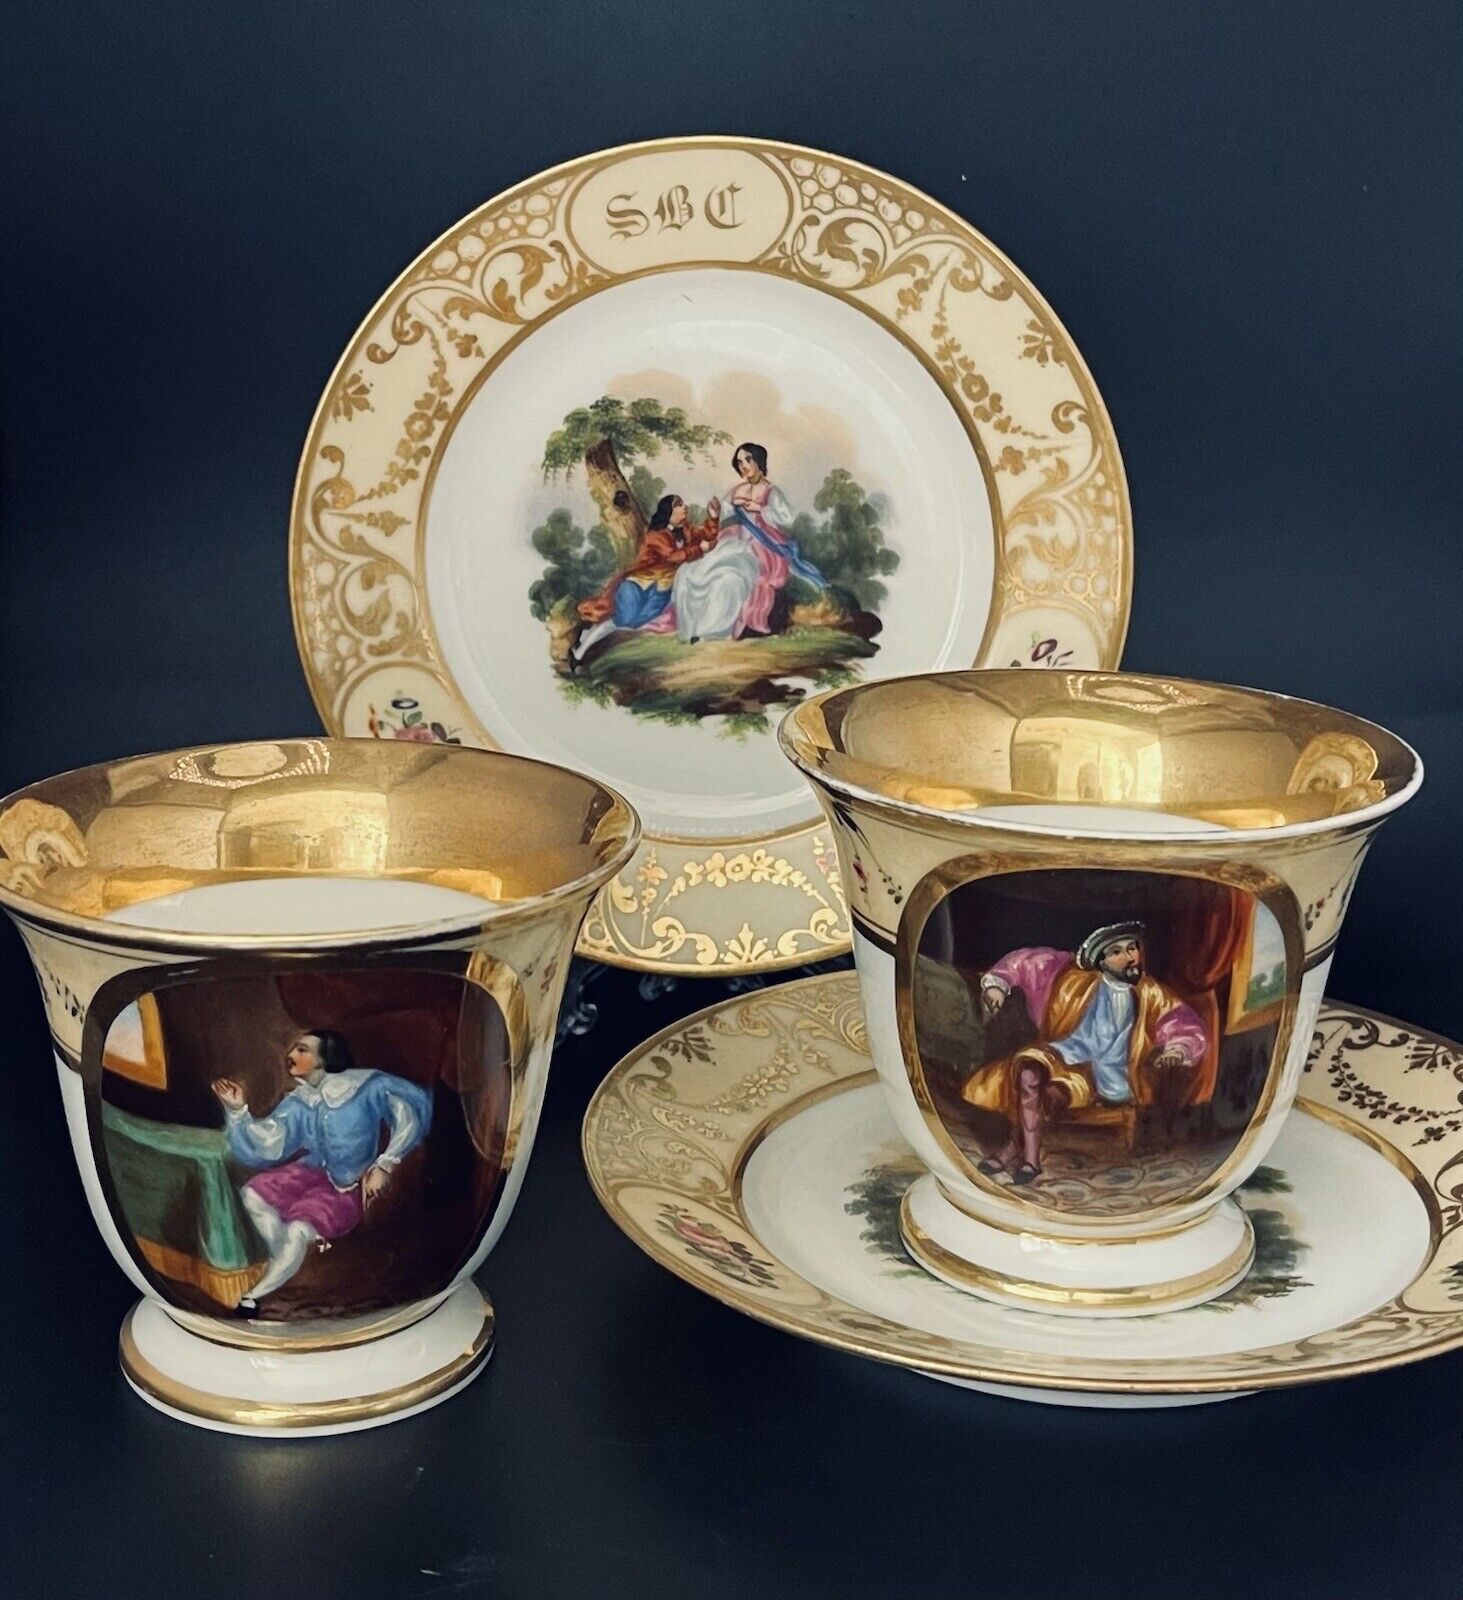 OLD PARIS Porcelain Hand Painted Monogram CHOCOLATE CUPS & SAUCER Pair 1830s